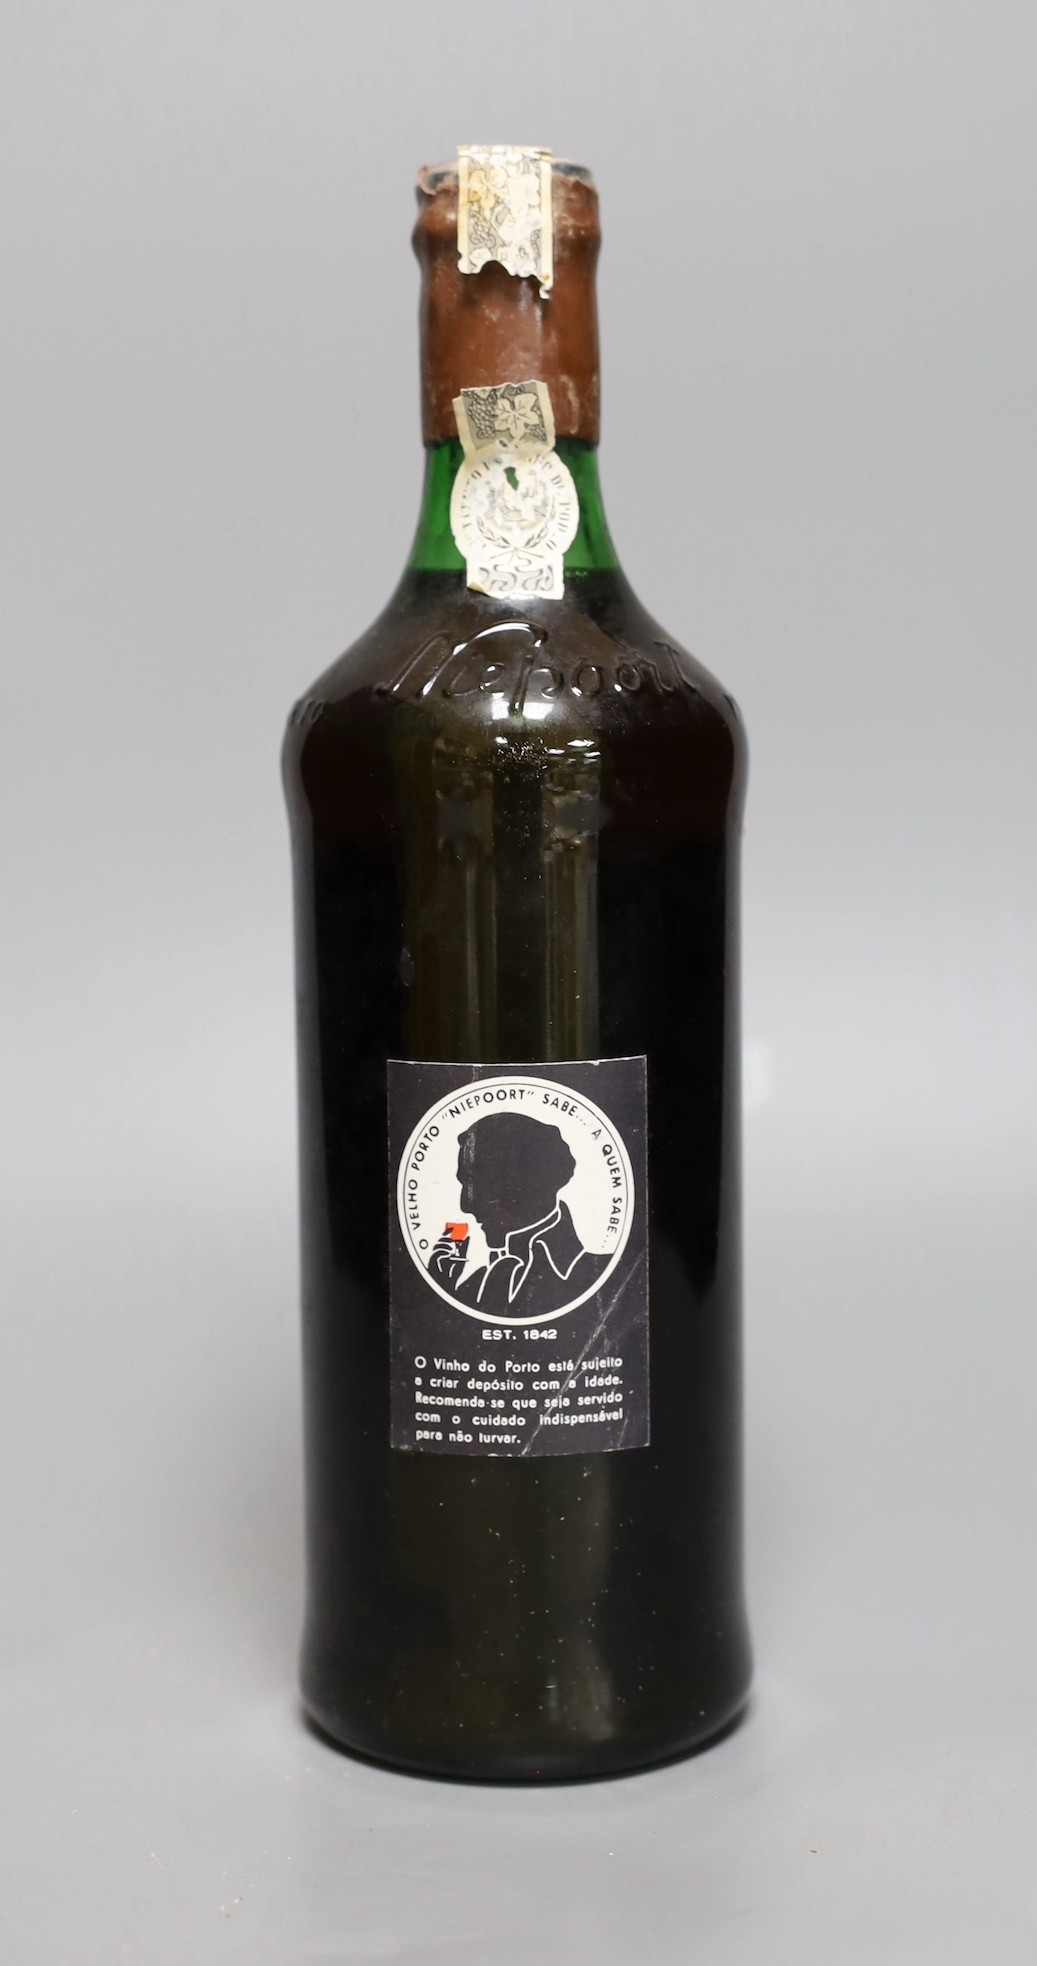 One bottle of Niepoort’s 1948 vintage port in associated wooden case